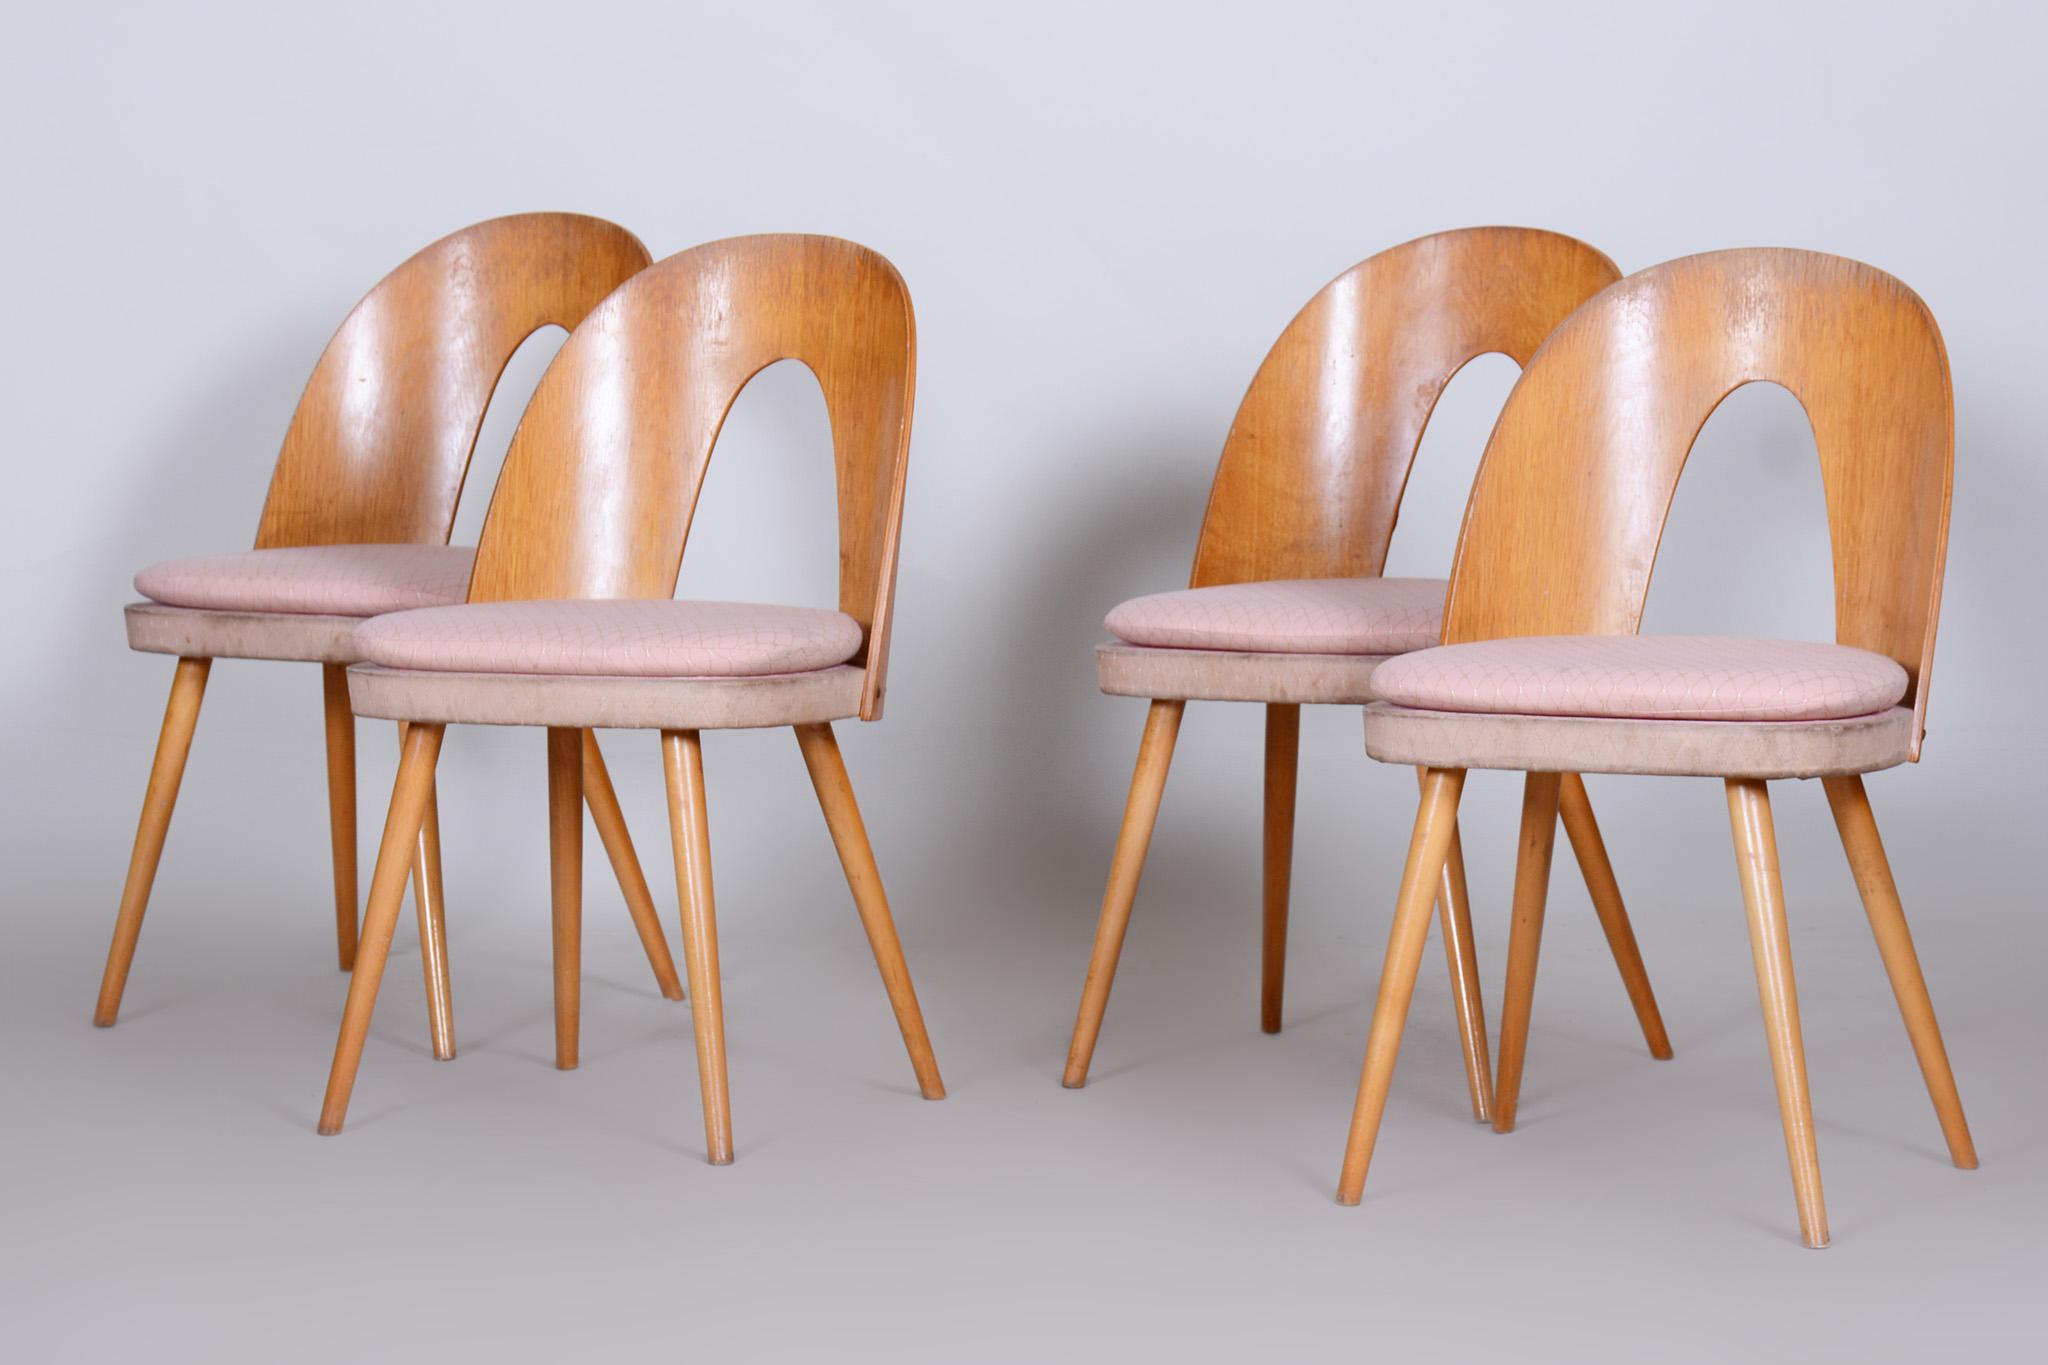 Mid-20th Century Set of Four Mid-Century Modern Chairs Made in 1950s Czechia by Antonín Šuman